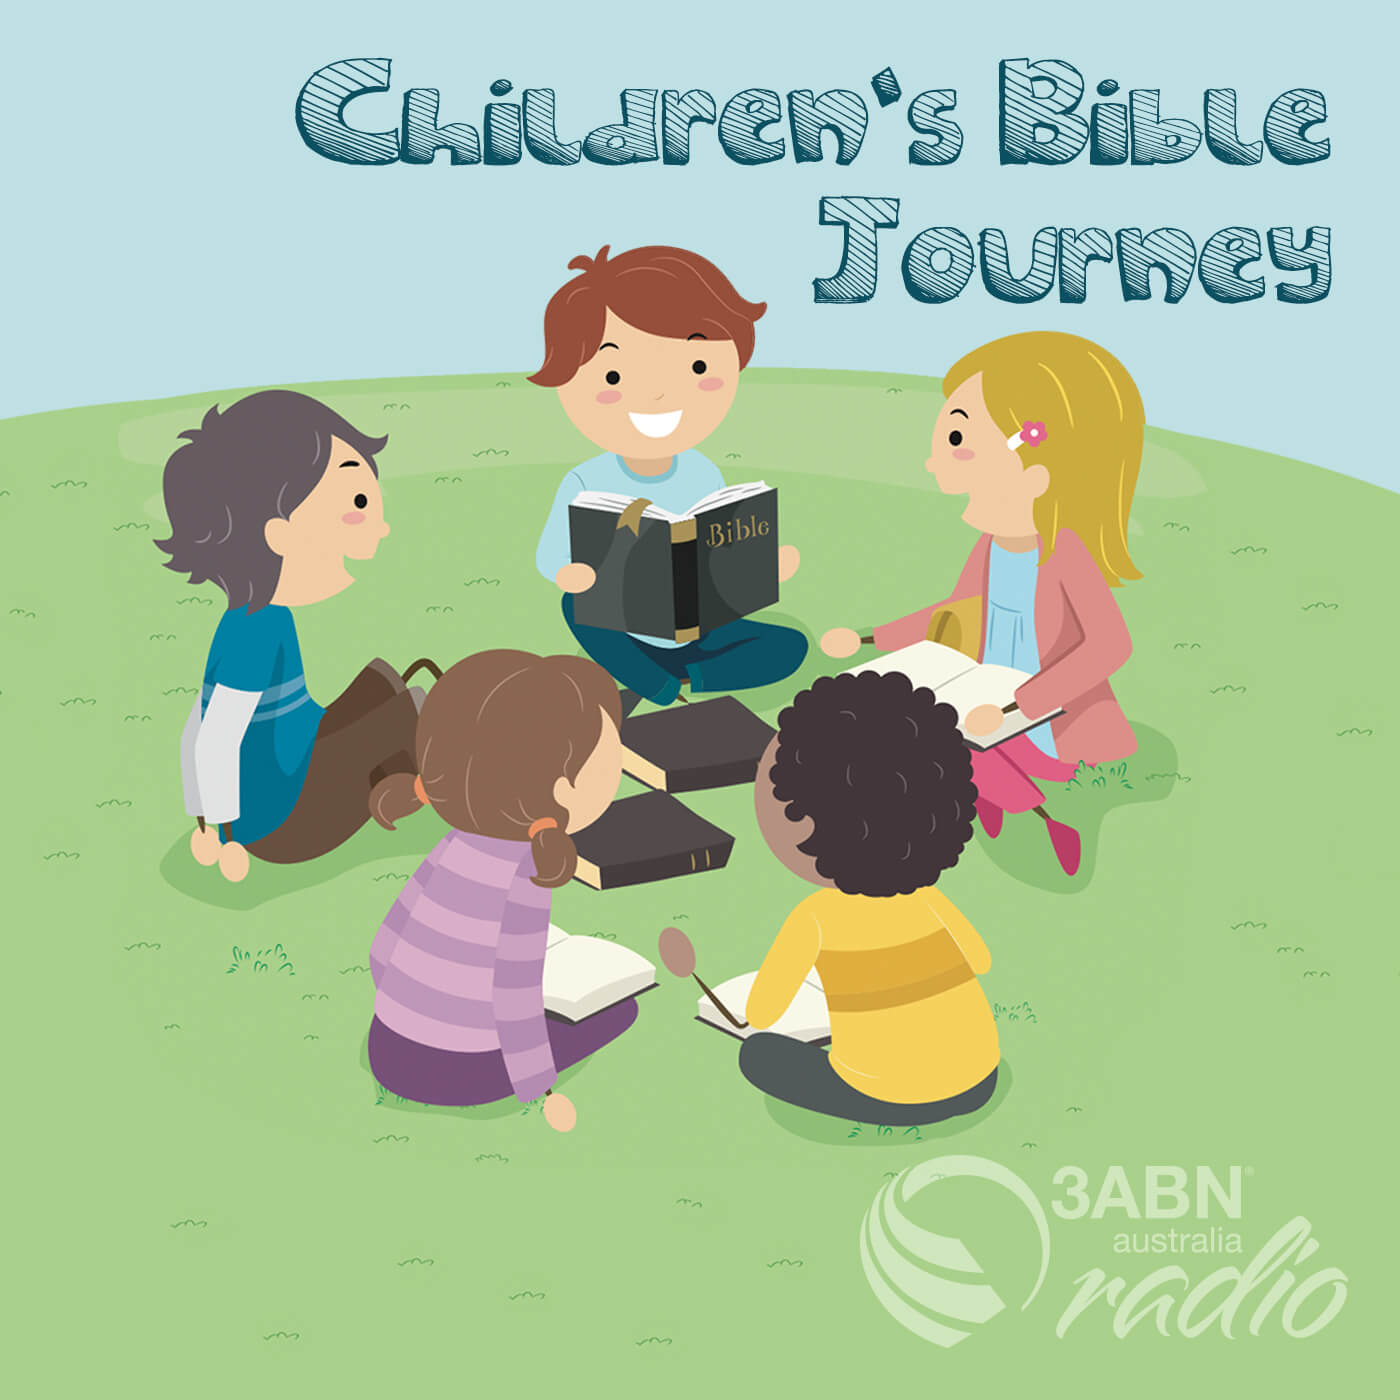 Children's Bible Journey - 2217